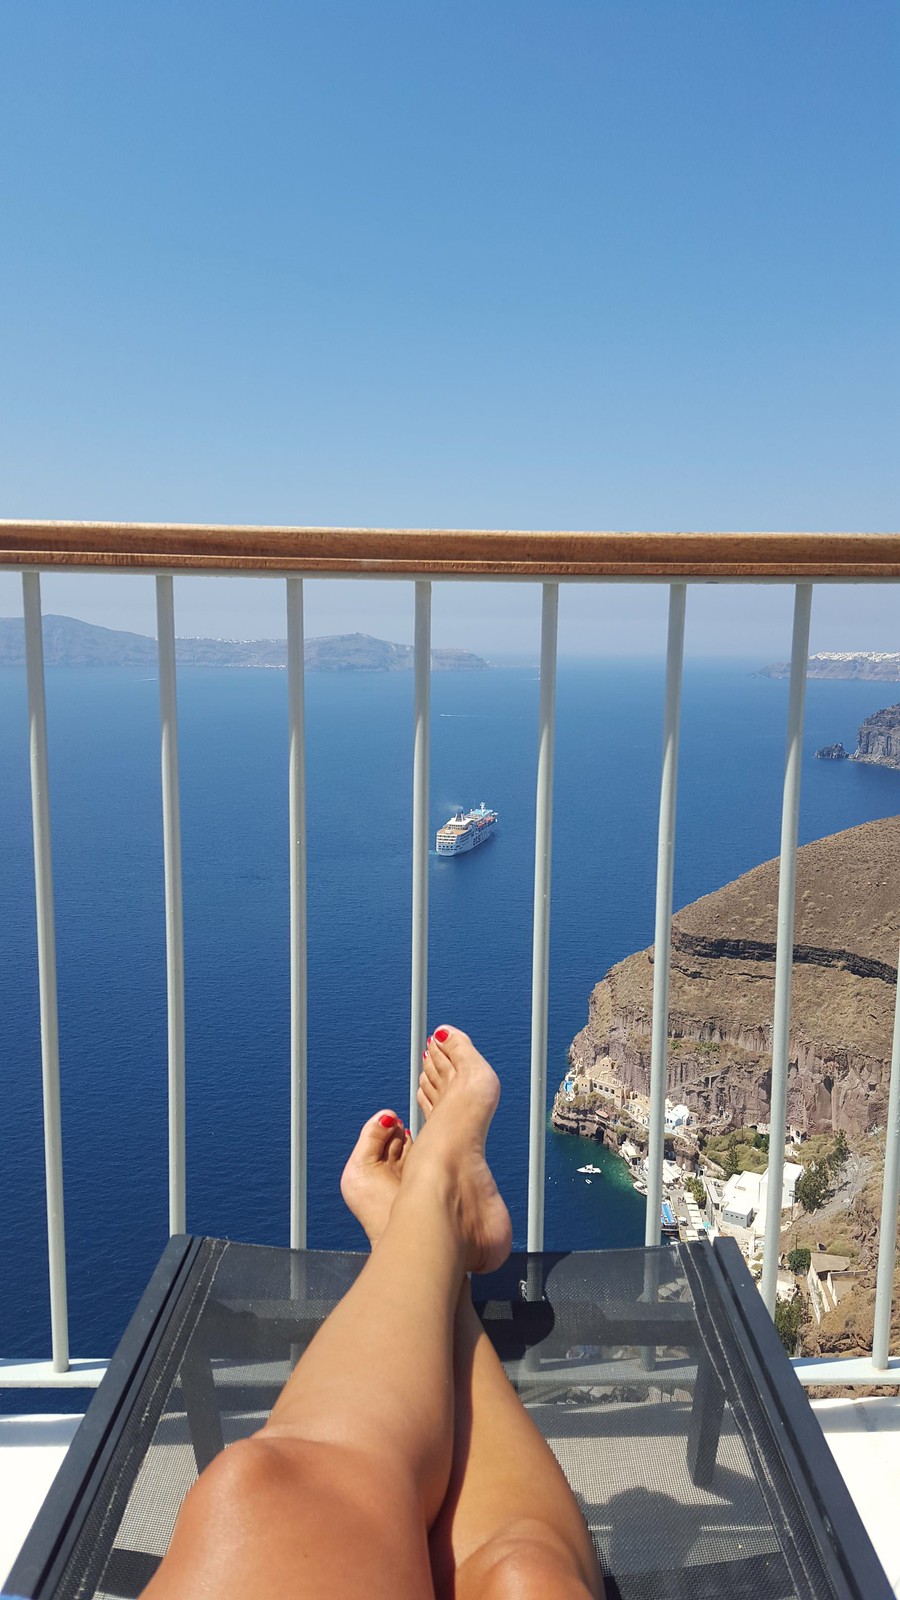 Santorini has a view